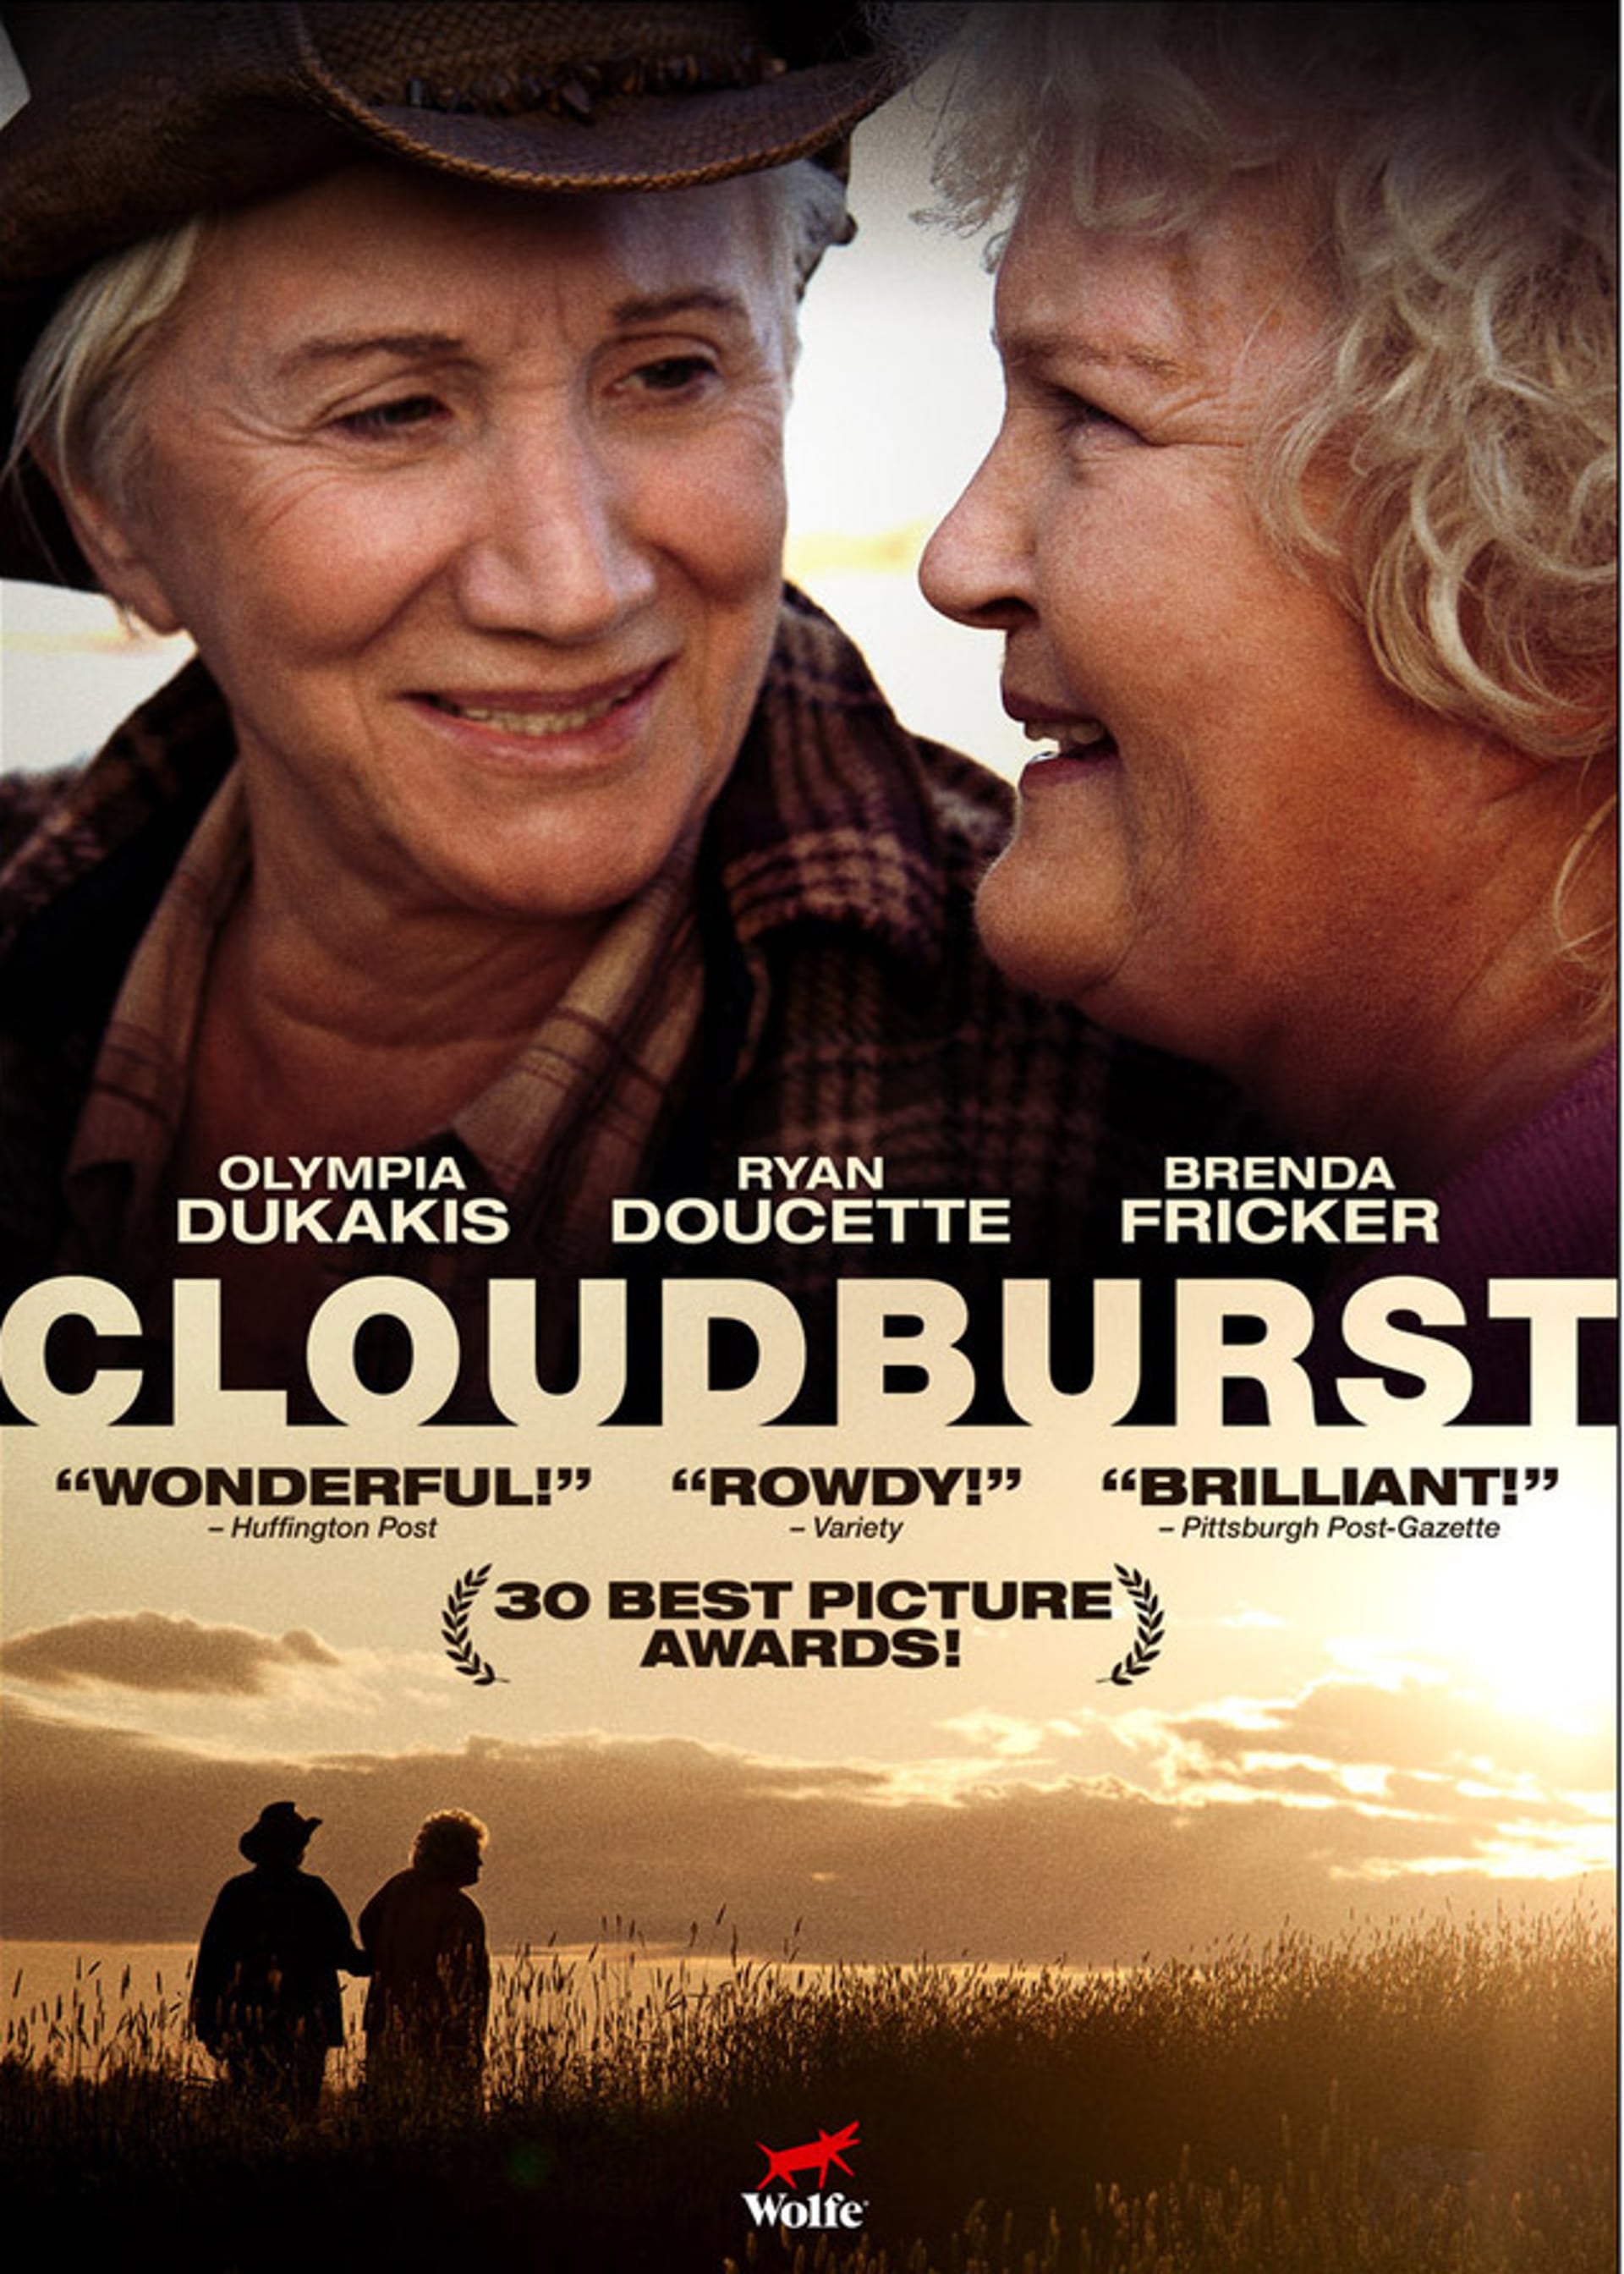 cloudburst 2011 film